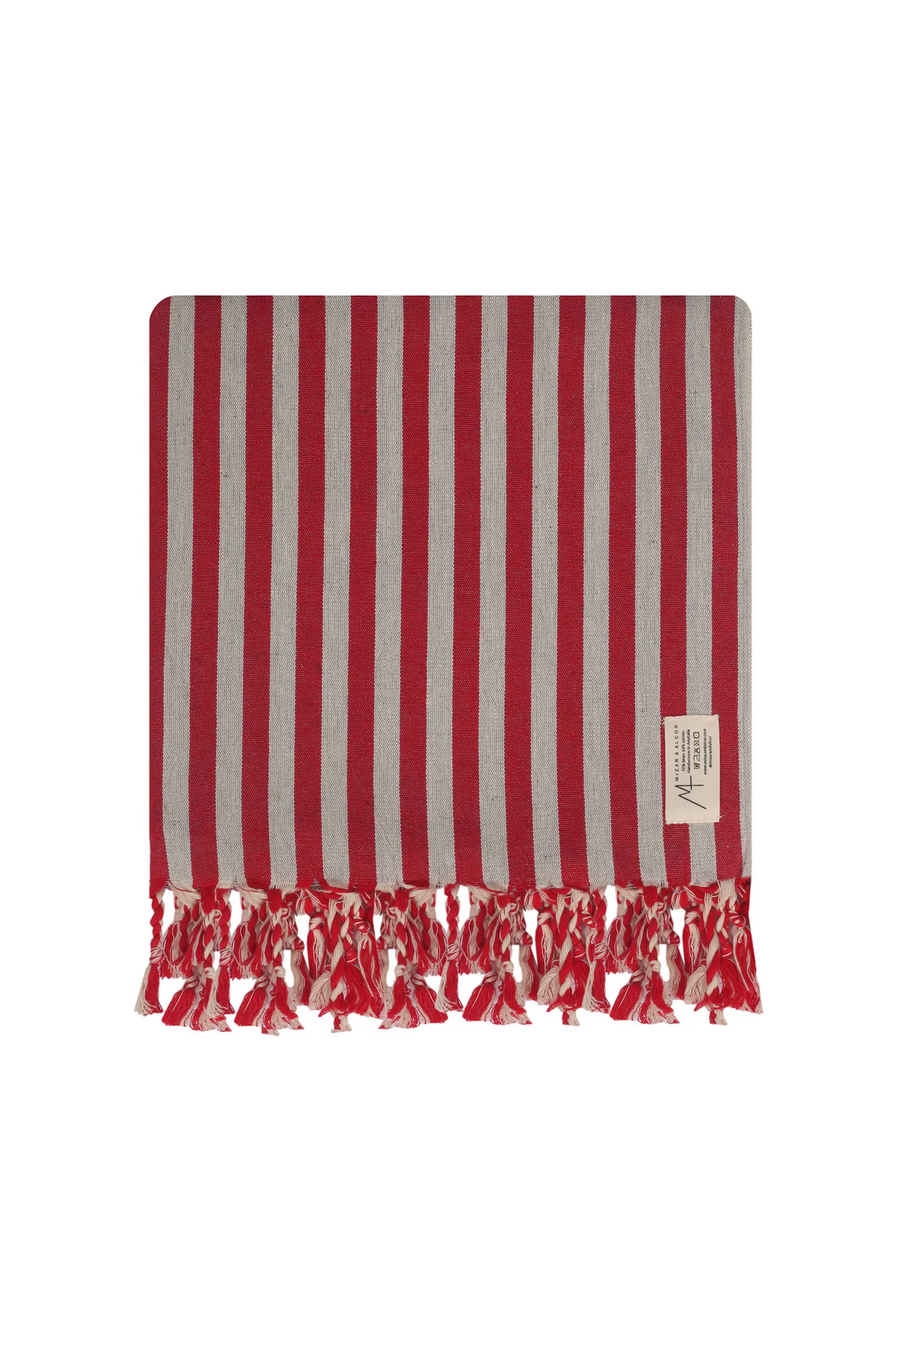 Striped Red Towel - 80 x 40’ - Mizar & Alcor - Bath - $65